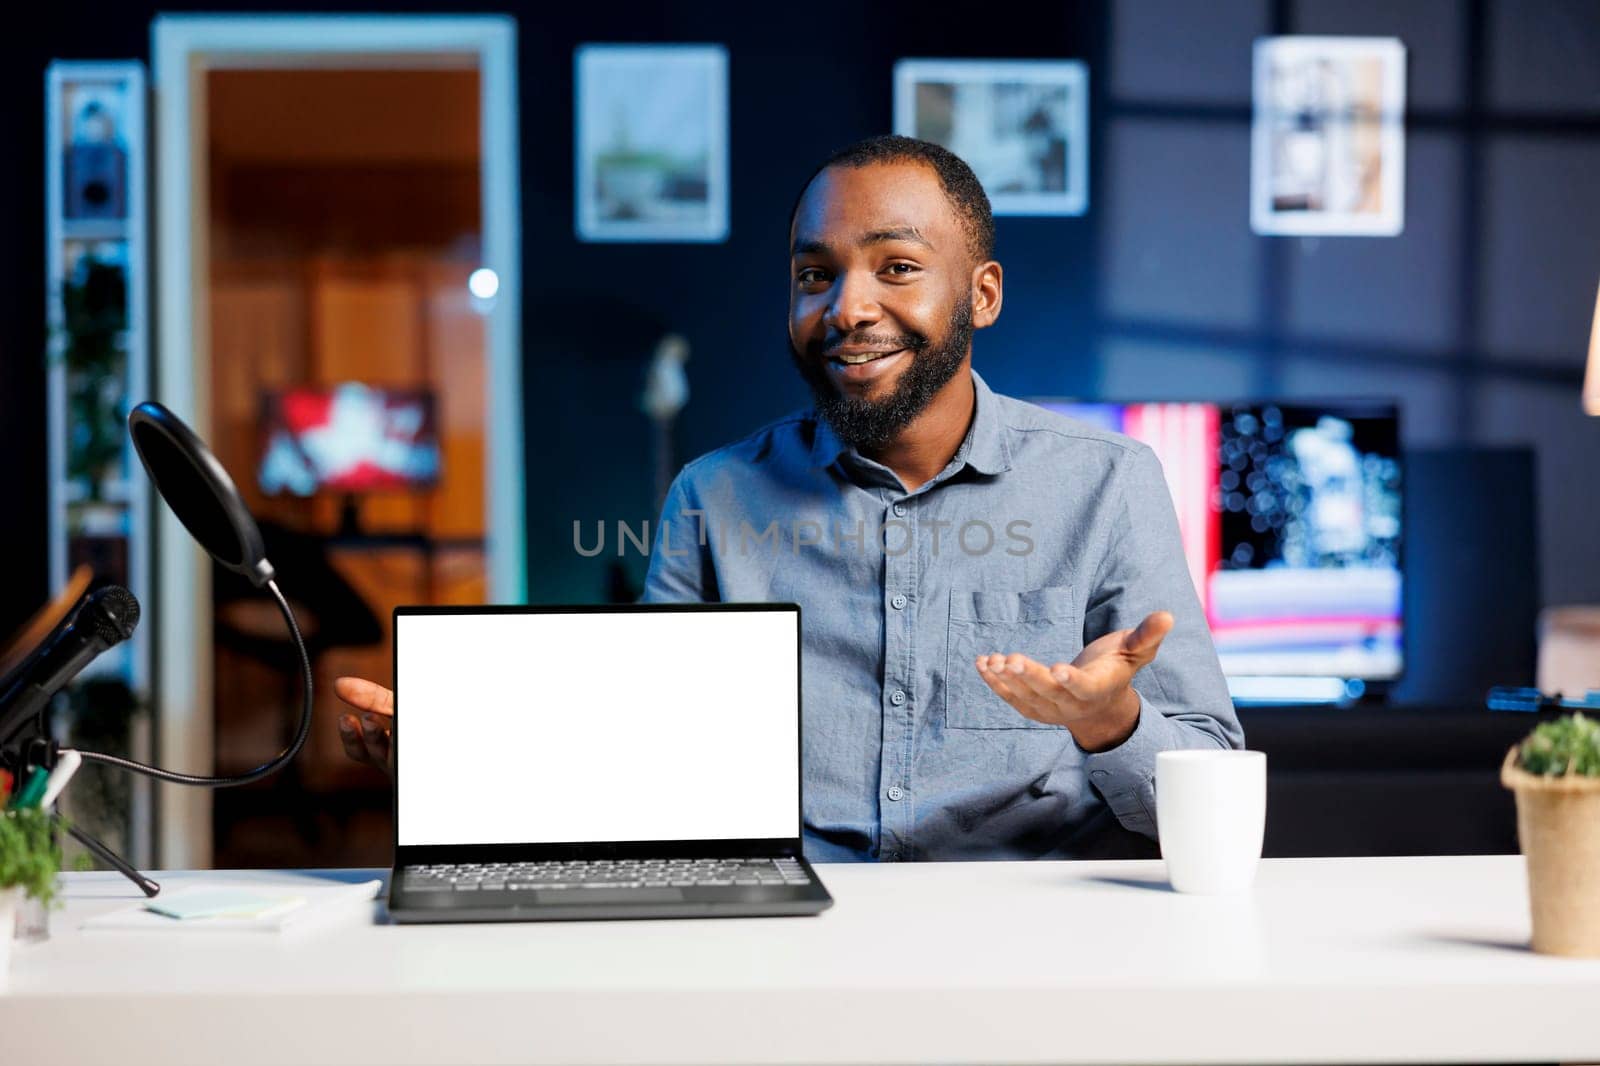 Man unboxing mockup laptop from sponsor by DCStudio